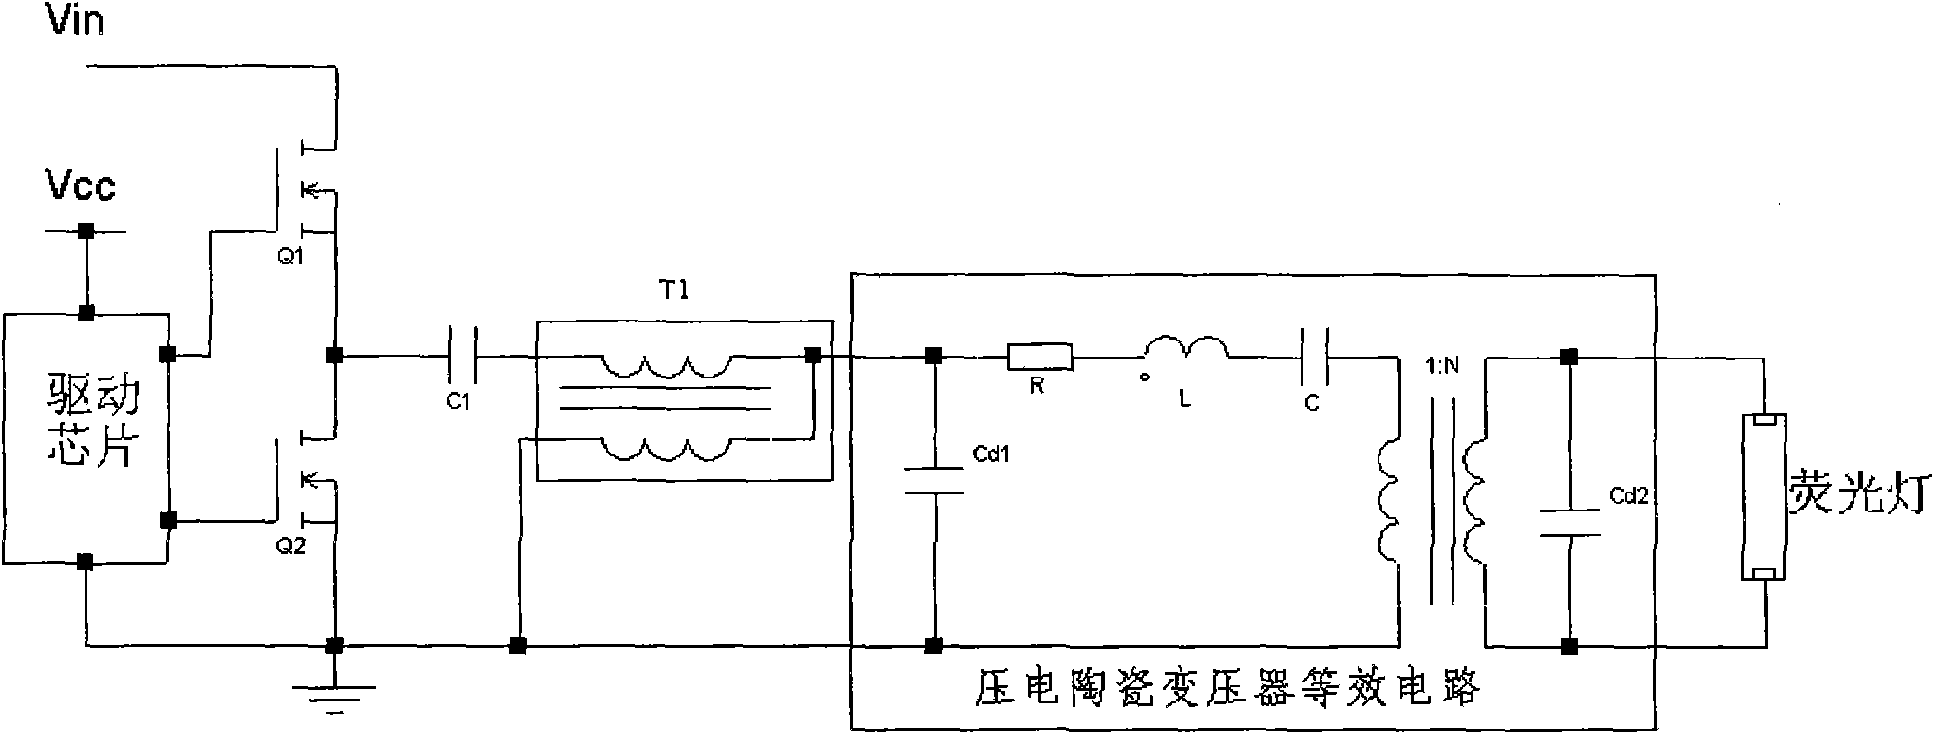 Electronic ballast applying piezoelectric ceramic transformer